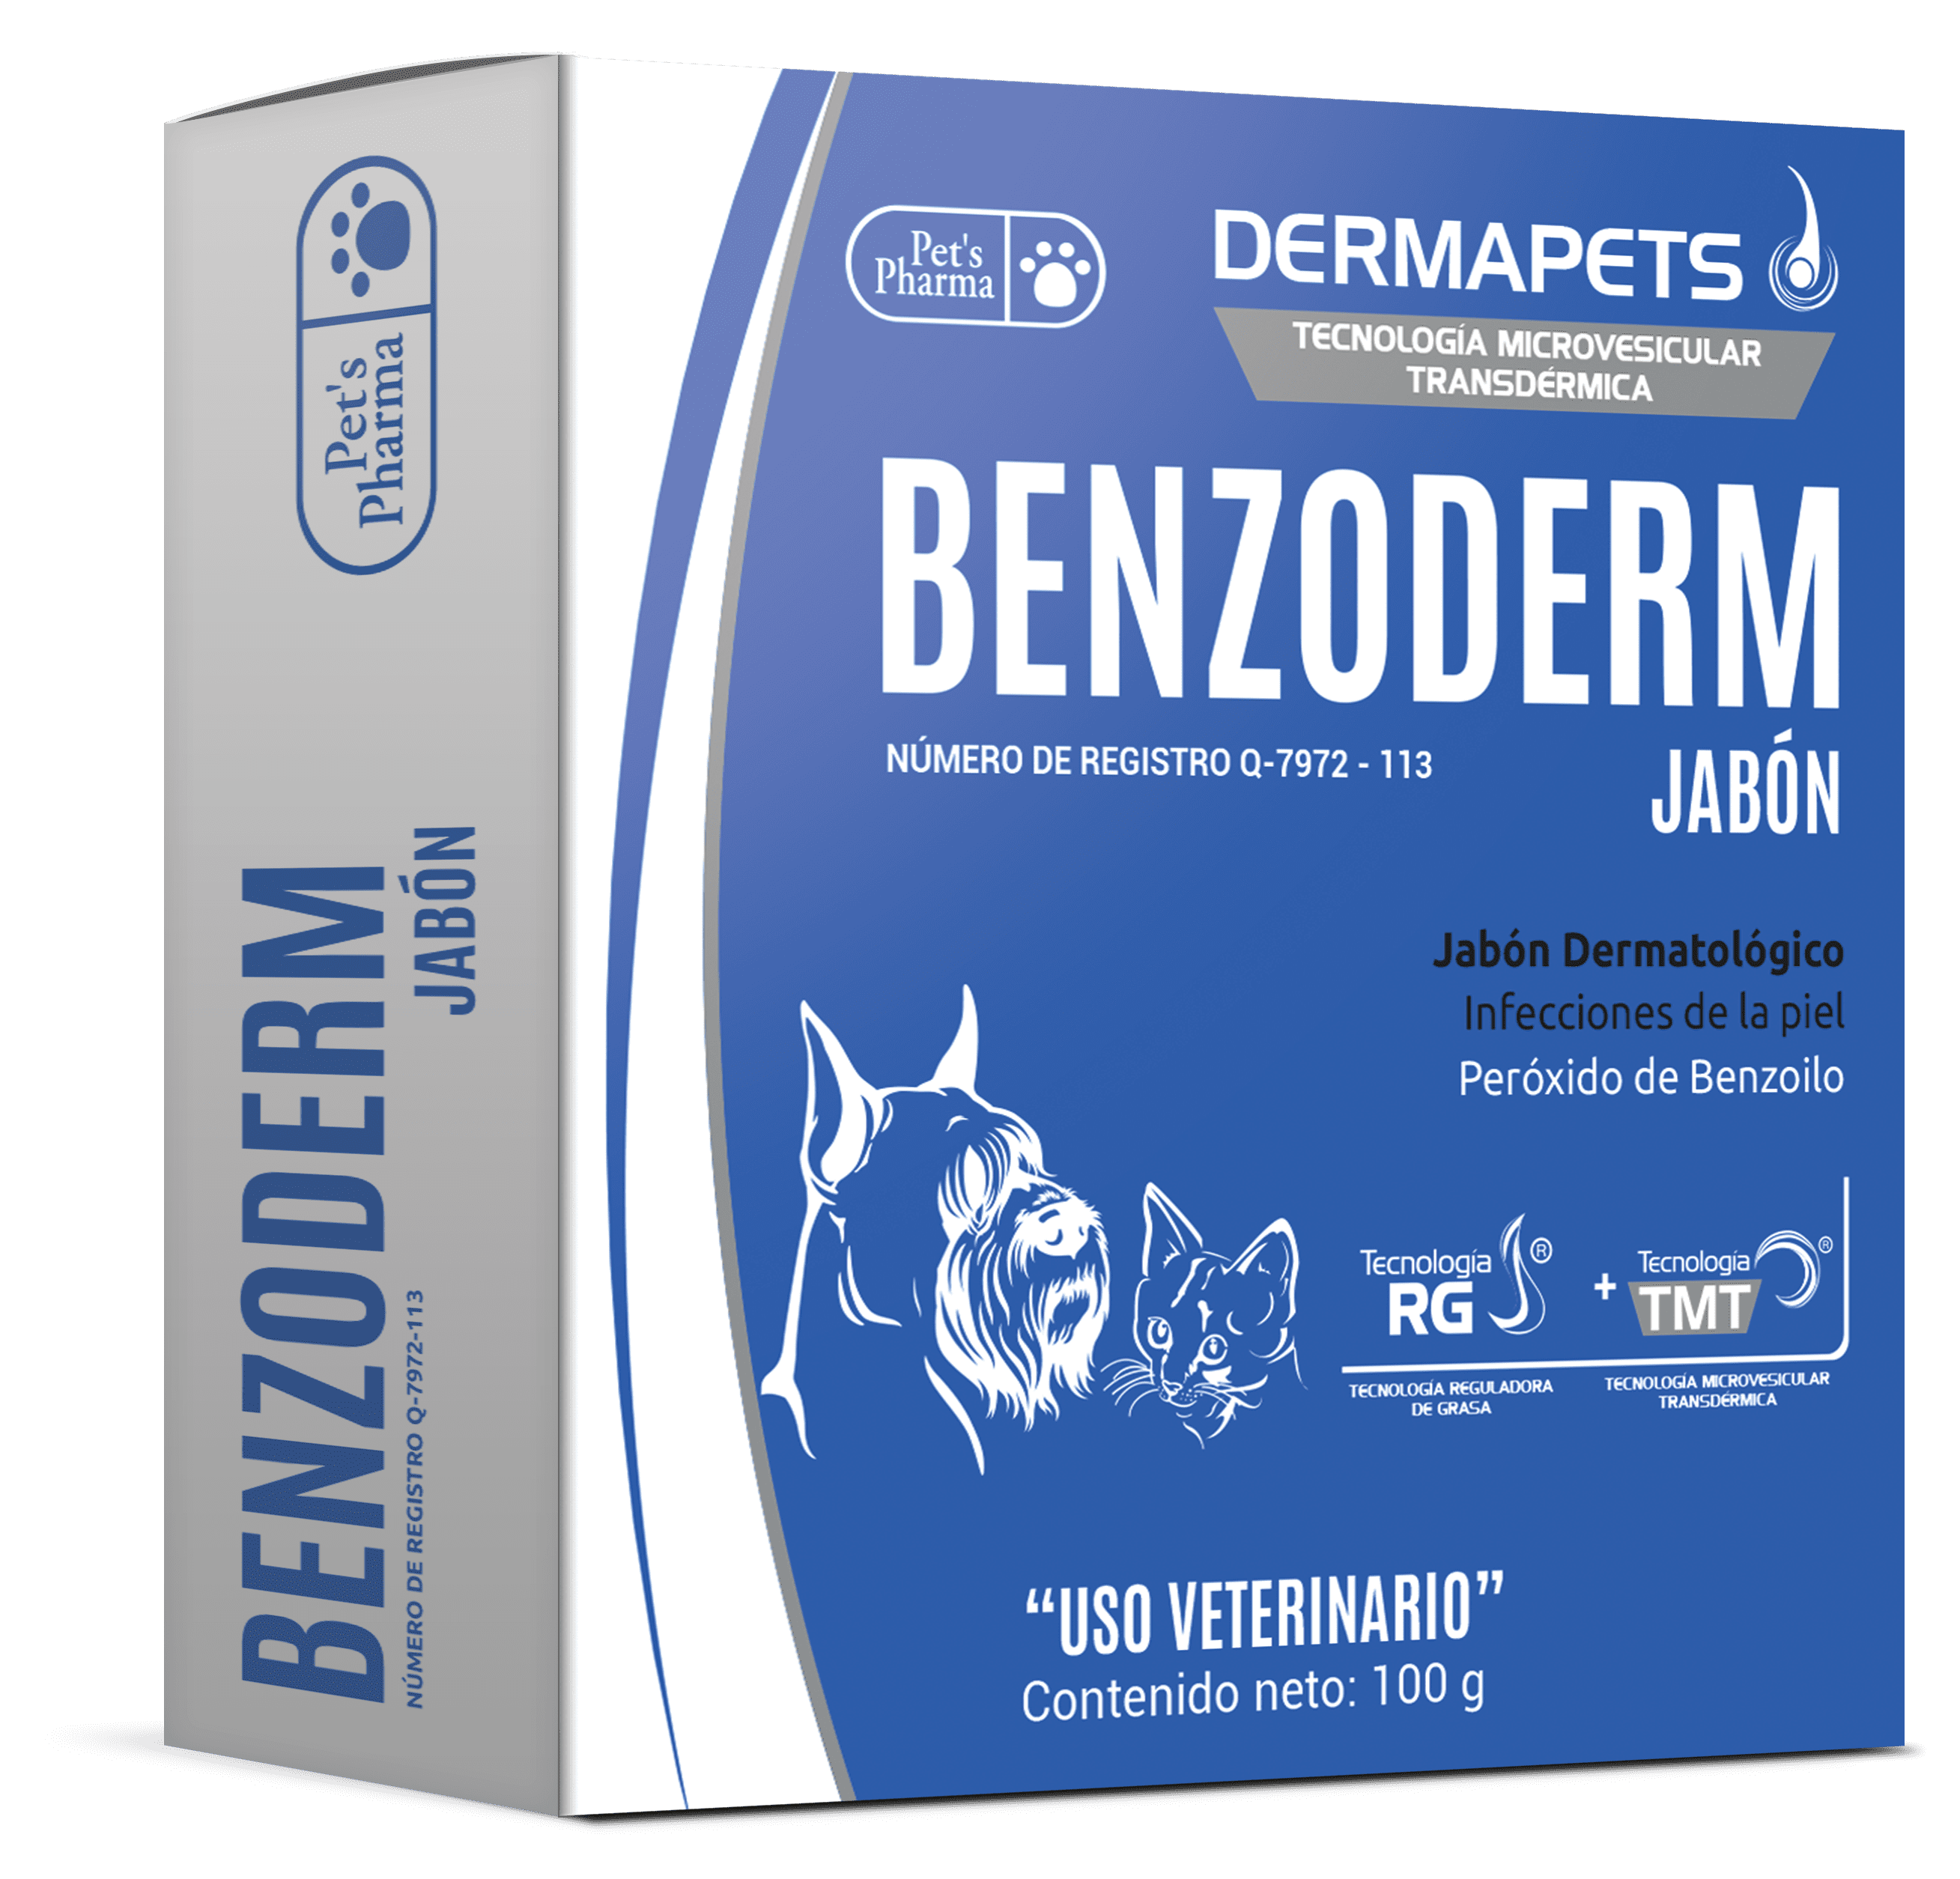 Benzoderm Jabón Dermatológico 100Gr - Pet's Pharma